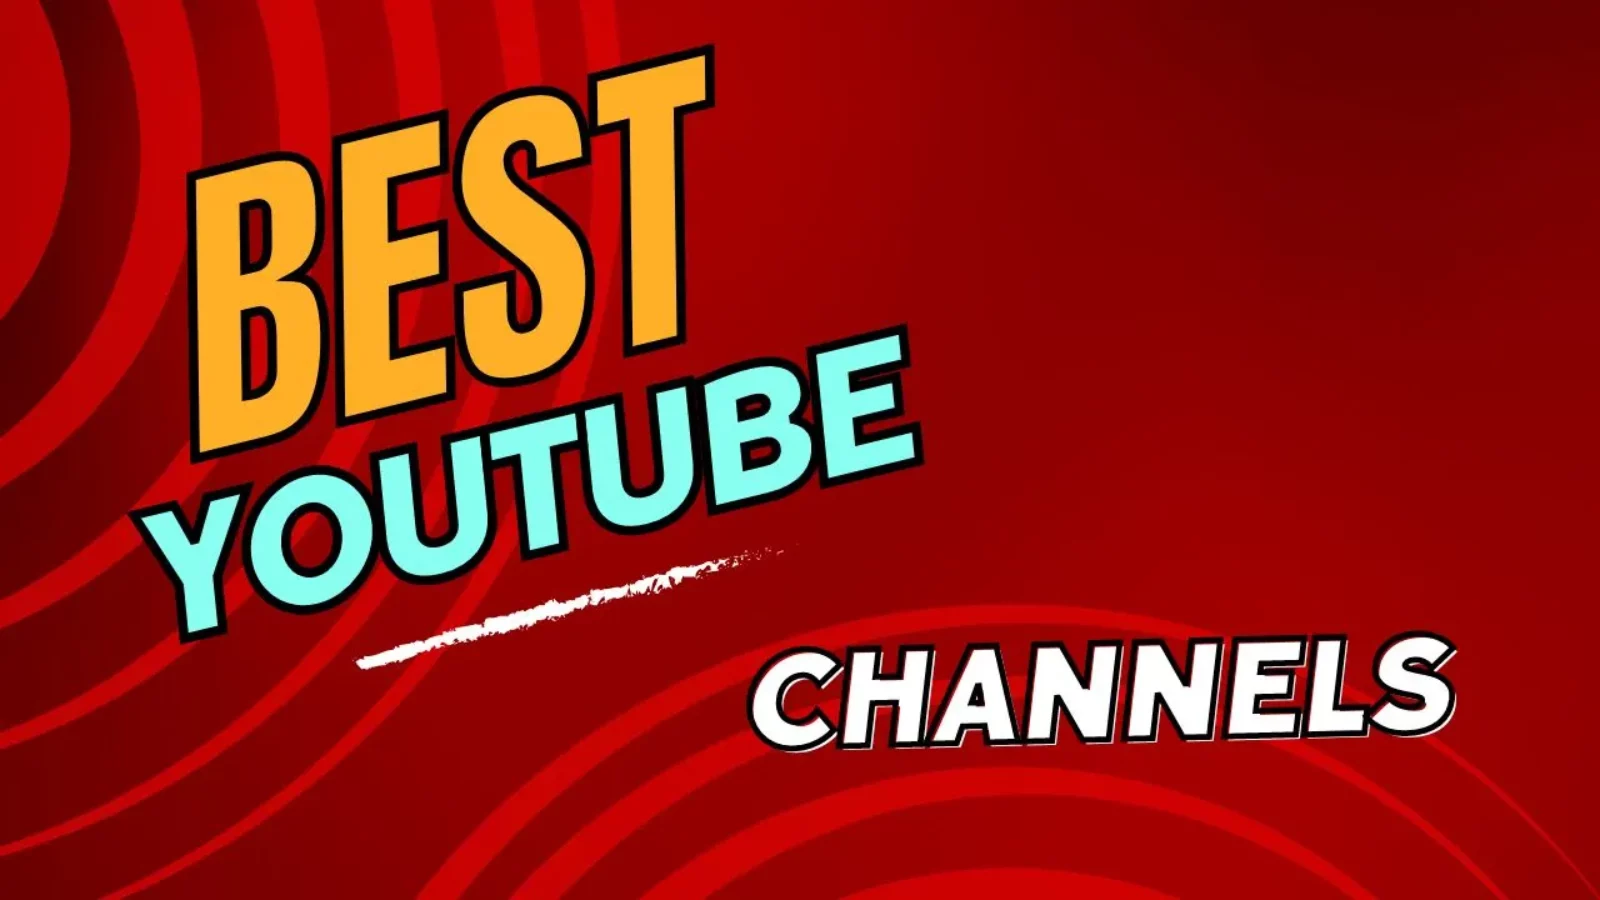 Best youtube channels